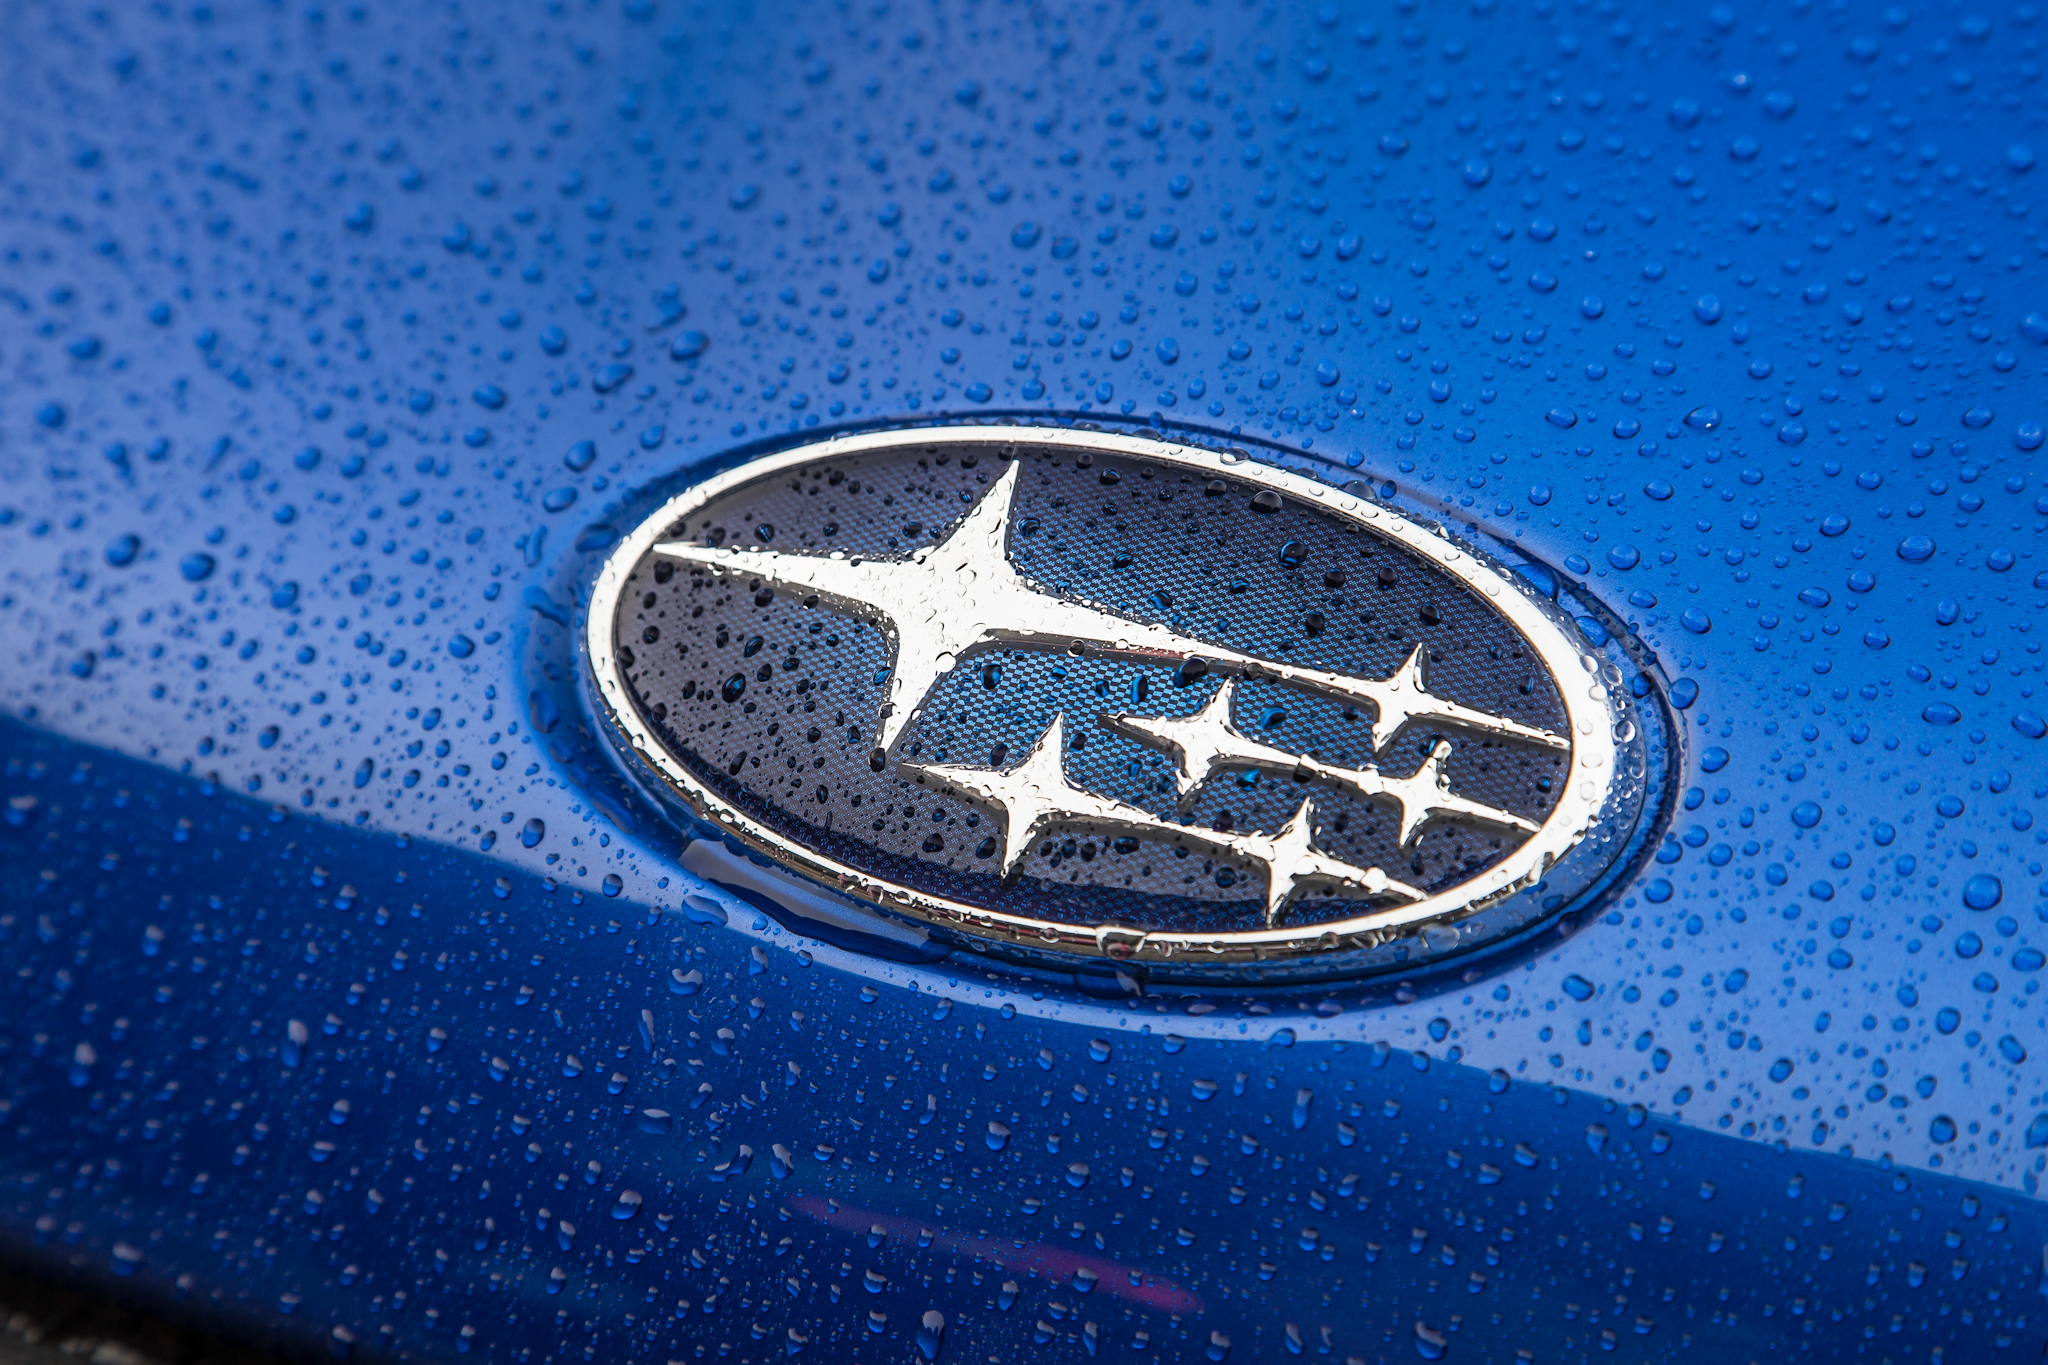 2048x1365 Subaru Logo, Subaru Car Symbol Meaning and History | Car brands car logos, meaning and symbol